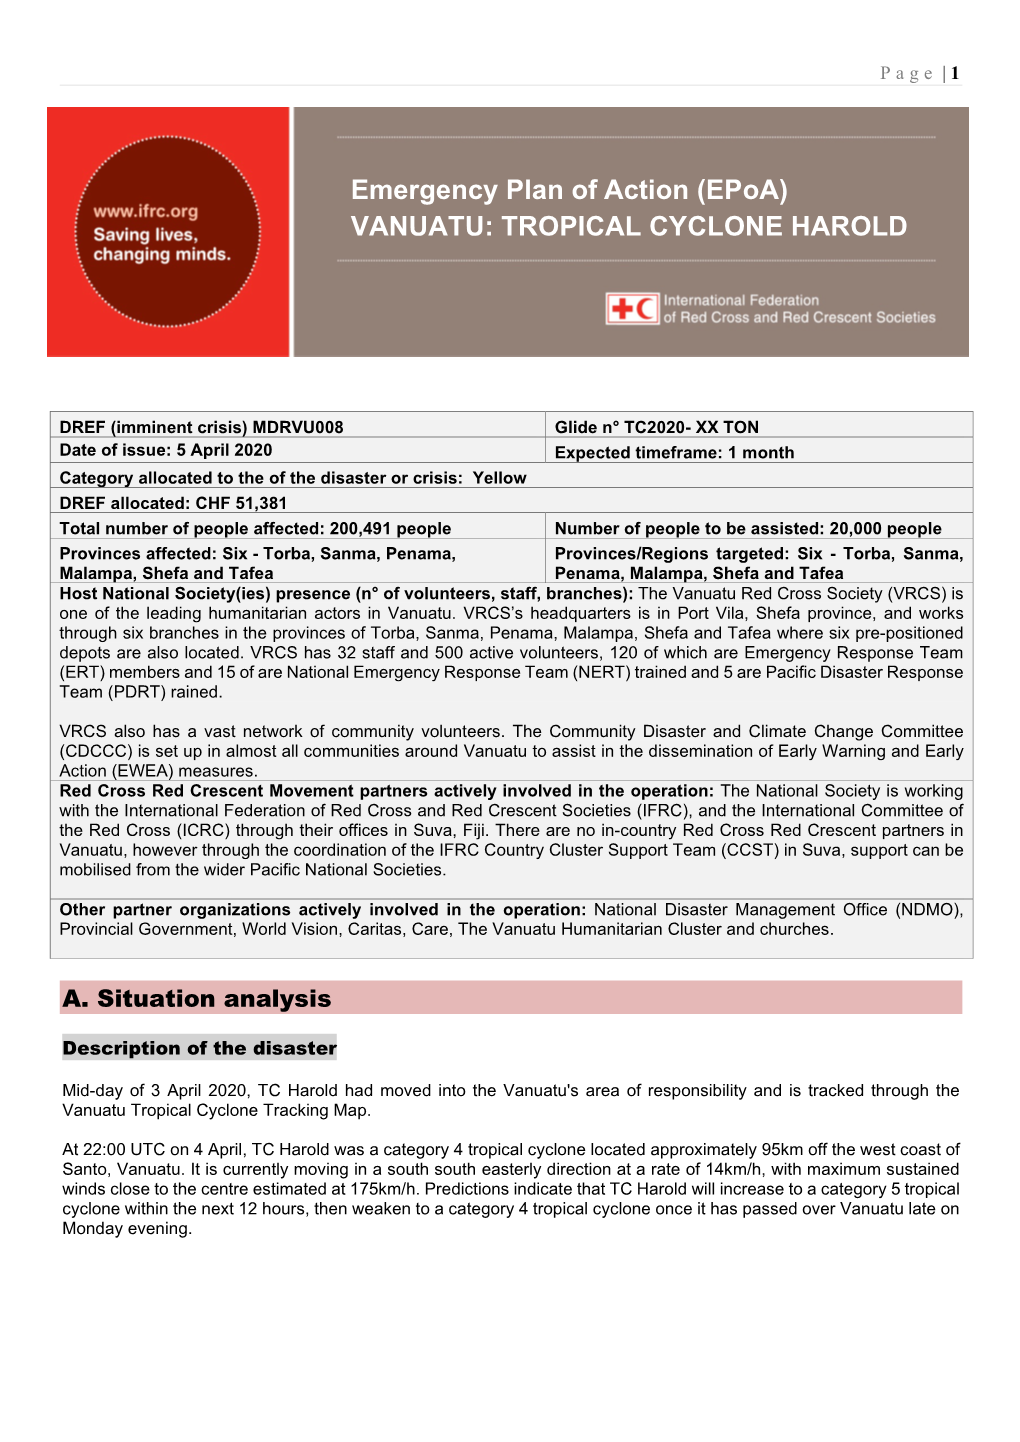 Emergency Plan of Action (Epoa) VANUATU: TROPICAL CYCLONE HAROLD